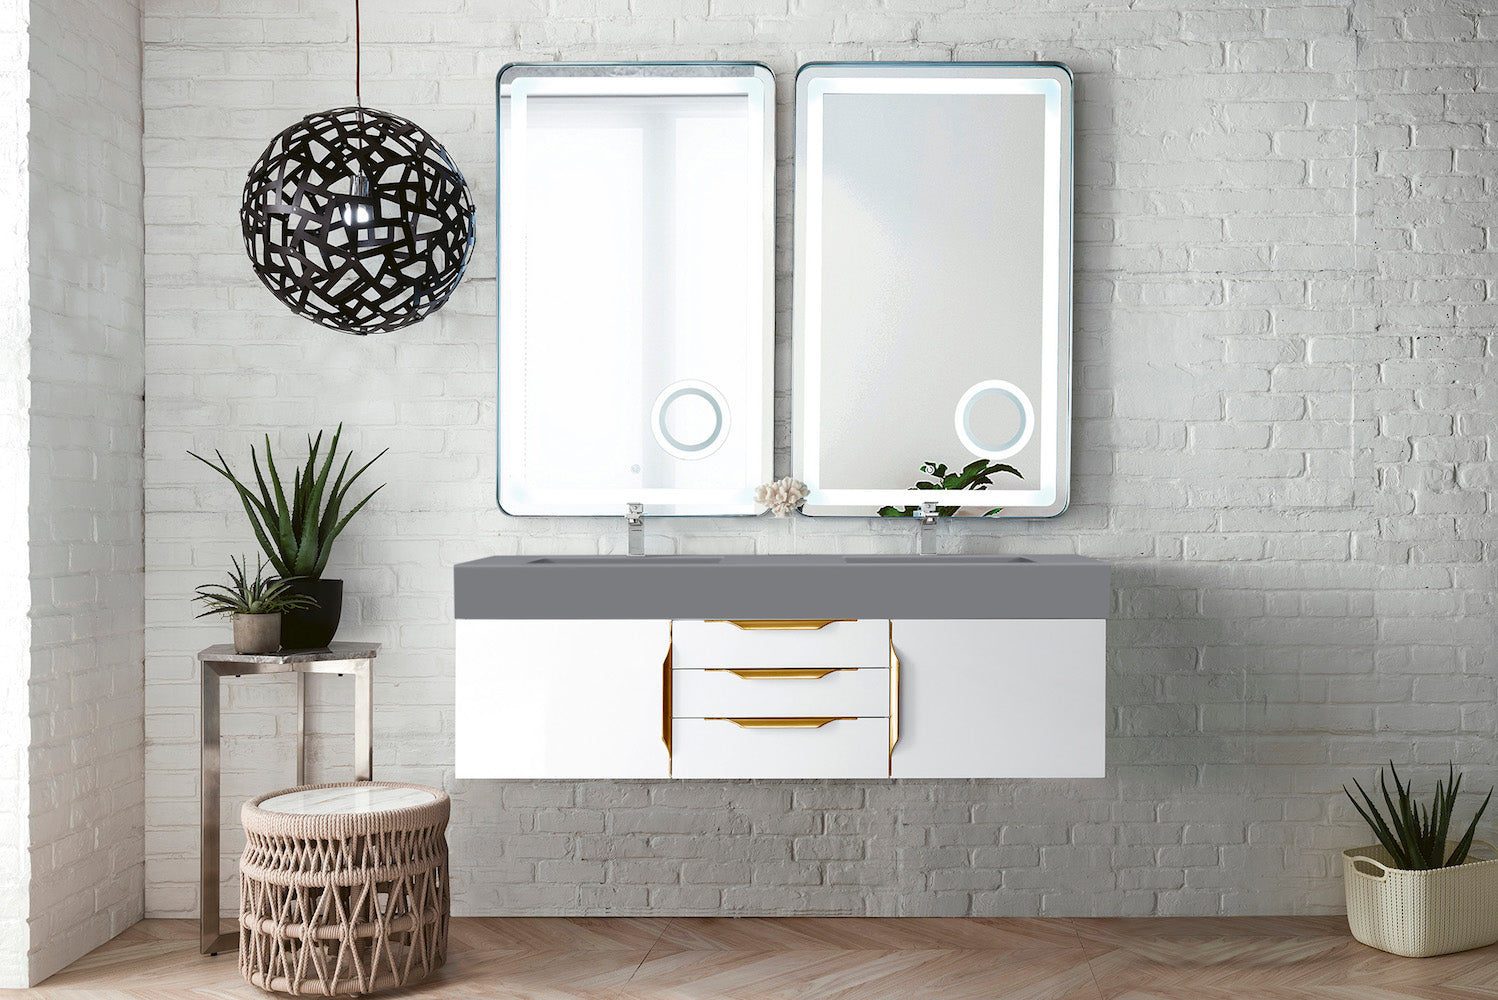 59" Mercer Island Double Sink Bathroom Vanity, Glossy White w/ Radiant Gold